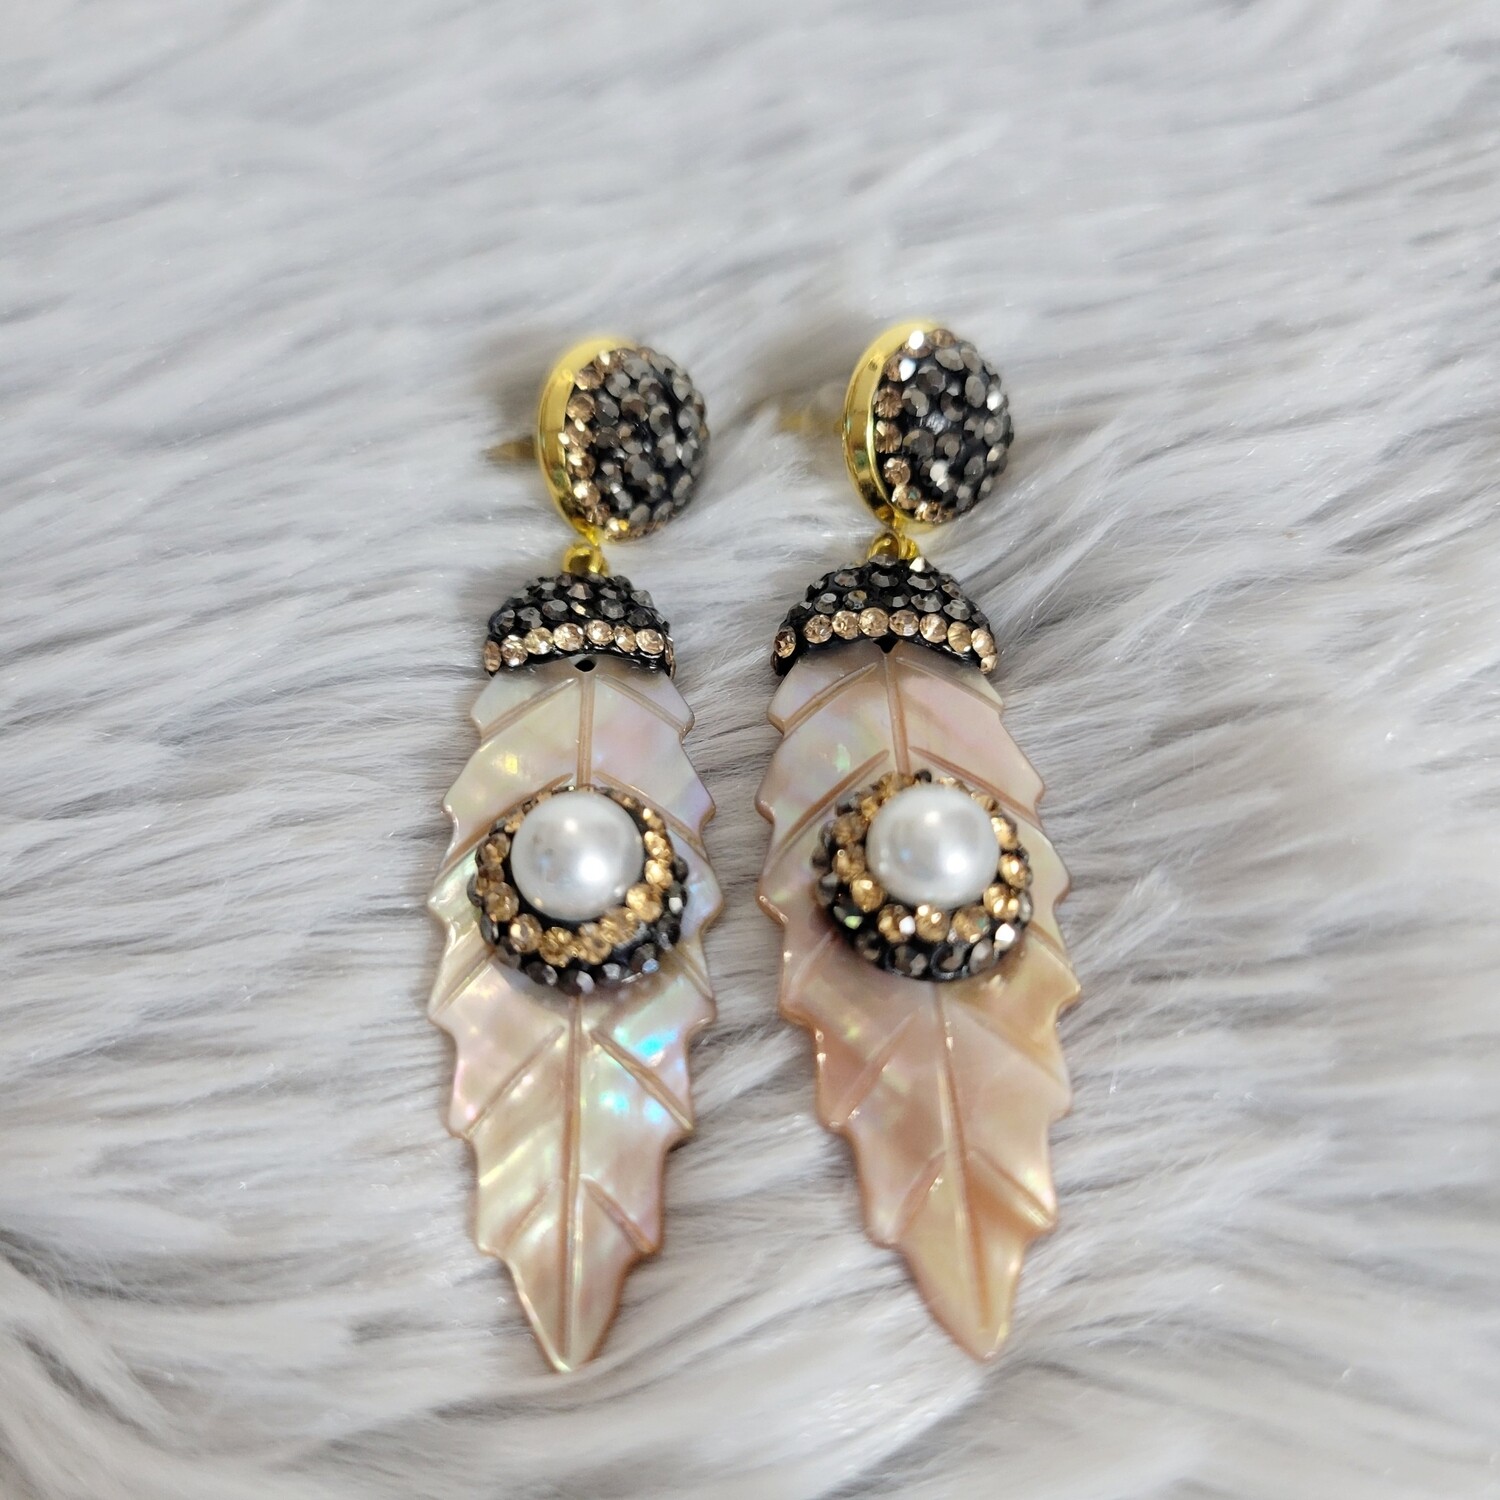 Decorated leaf earrings